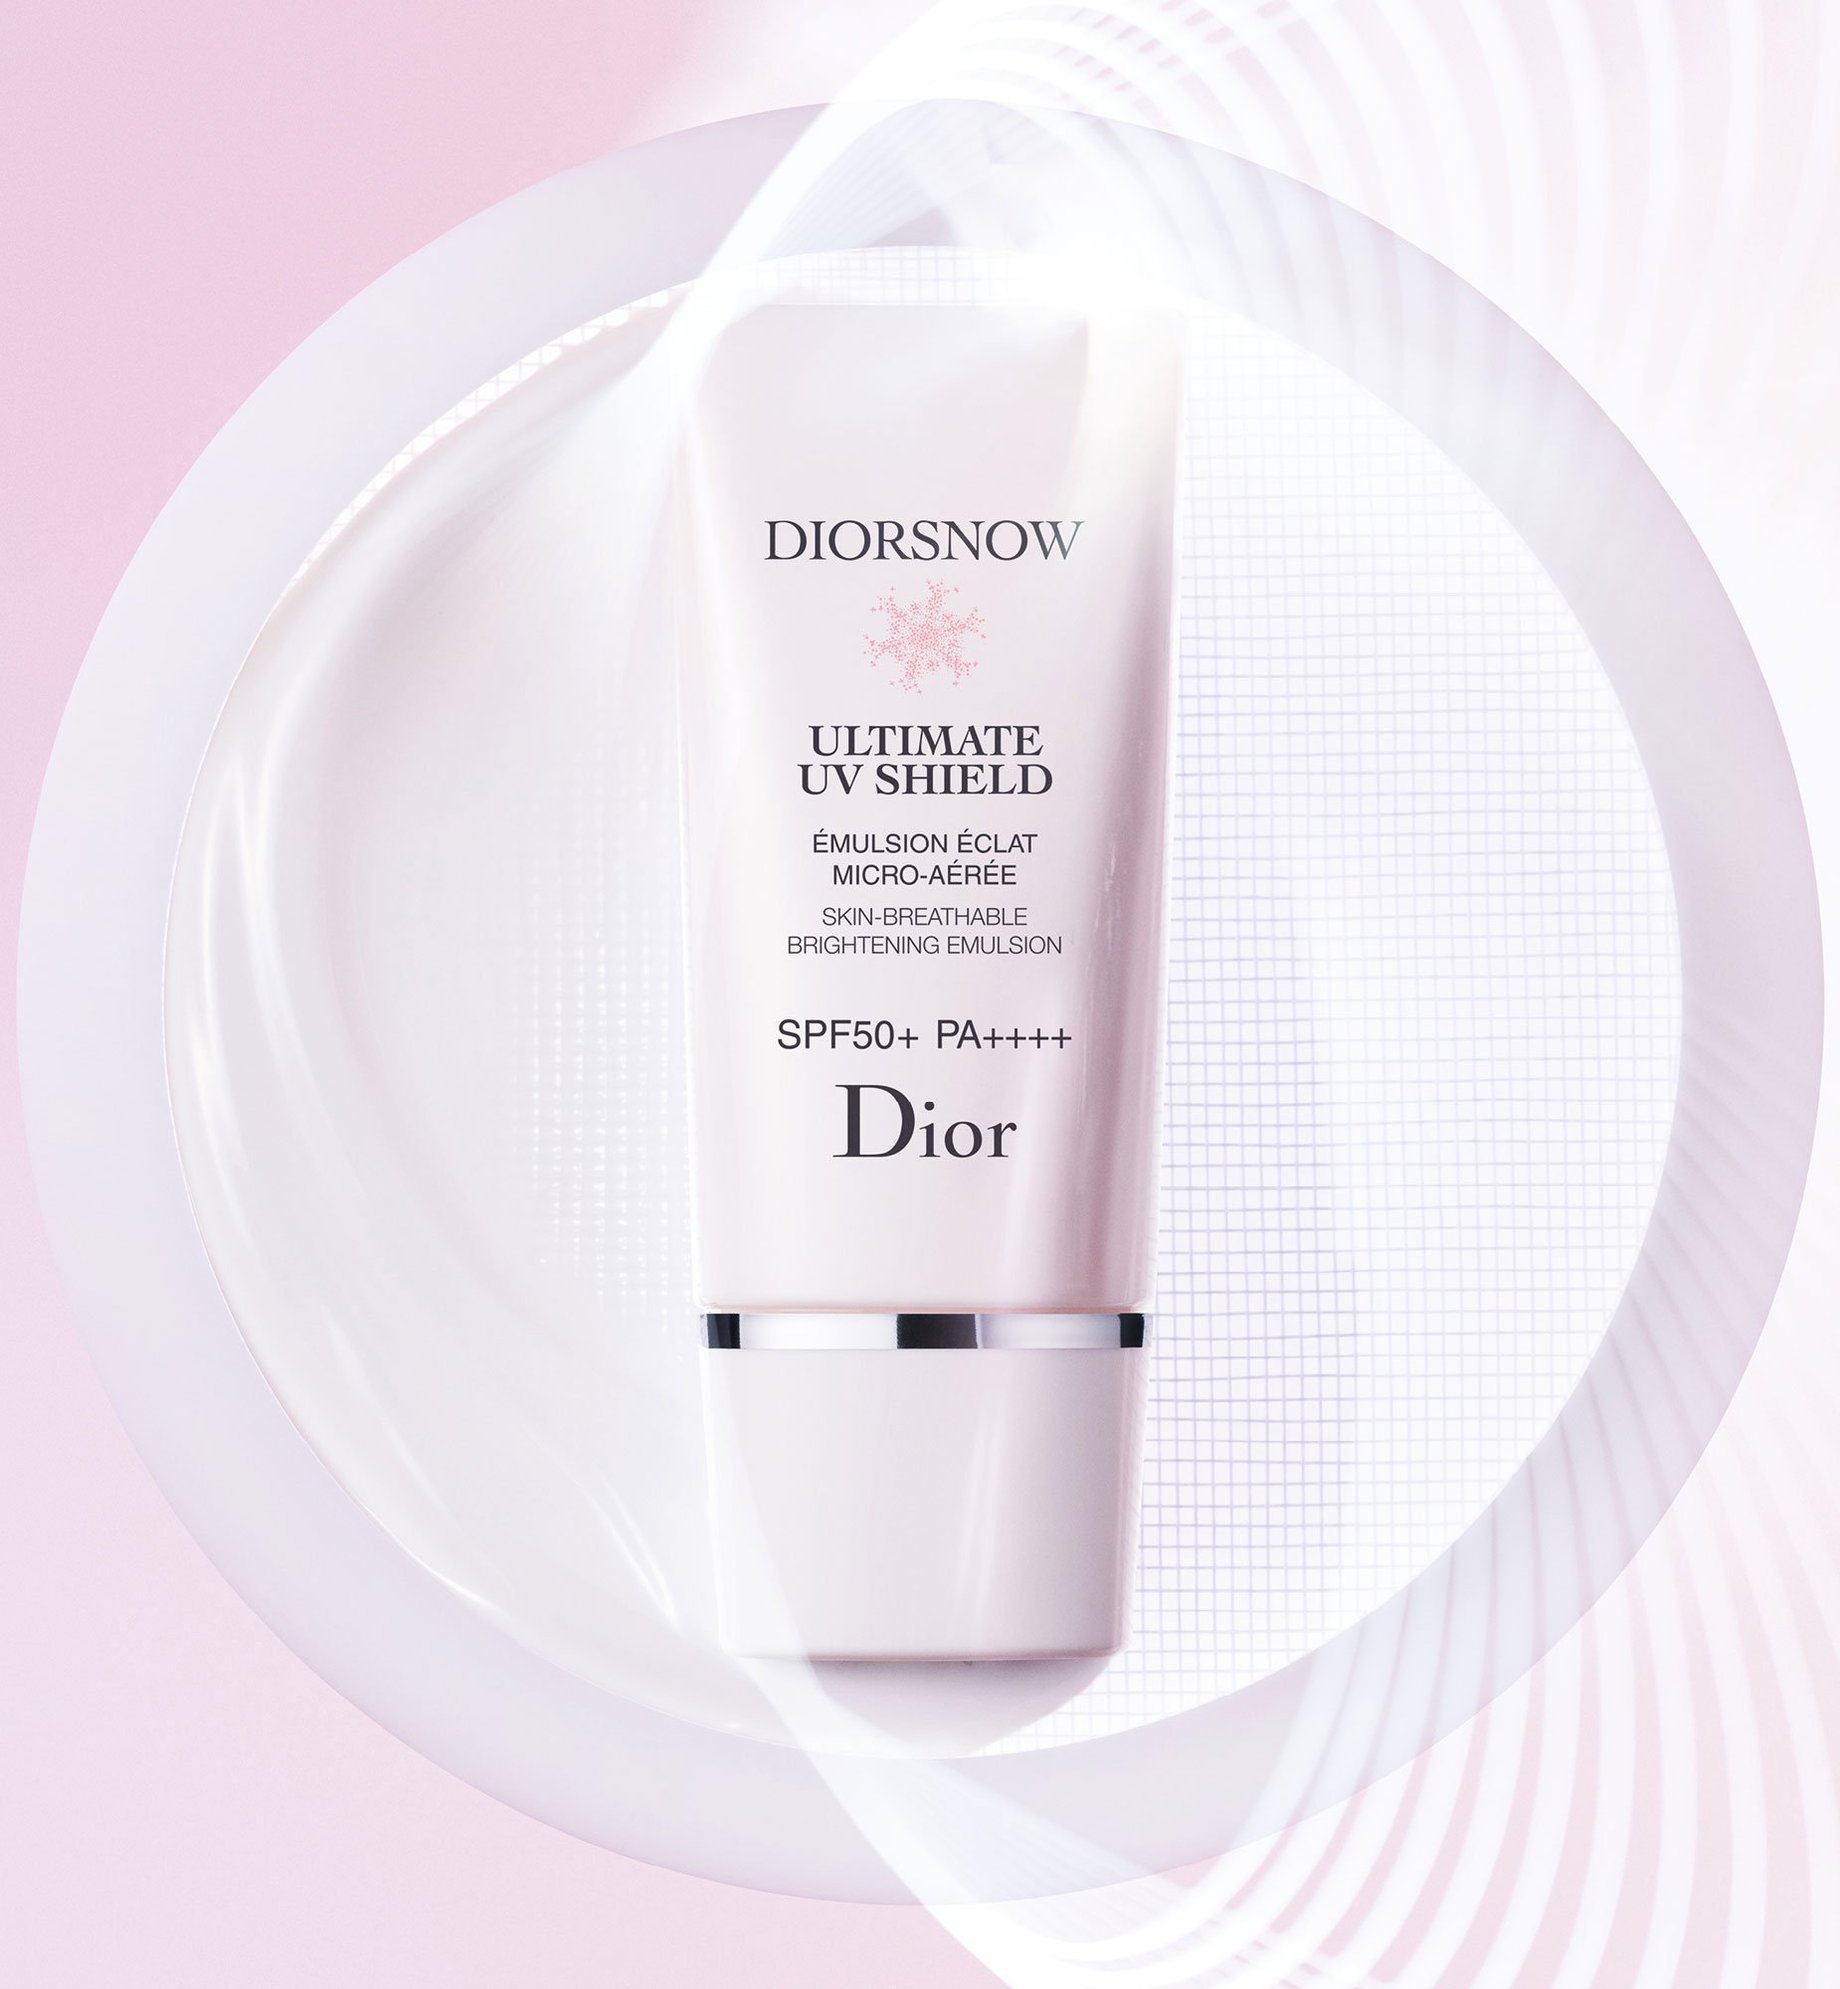 Dior Snow Ultimate UV Shield Skin-Breathable Brightening Emulsion ครีมกัดแดดที่ช่วยป้องกันรังสียูวี UVA UVB เนื้อสัมผัสเบาสบาย ผิวดูชุ่มชื้น กระจ่างใสขึ้น และช่วยปกป้องจากริ้วรอยแห่งวัย กันน้ำ กันเหงื่อ